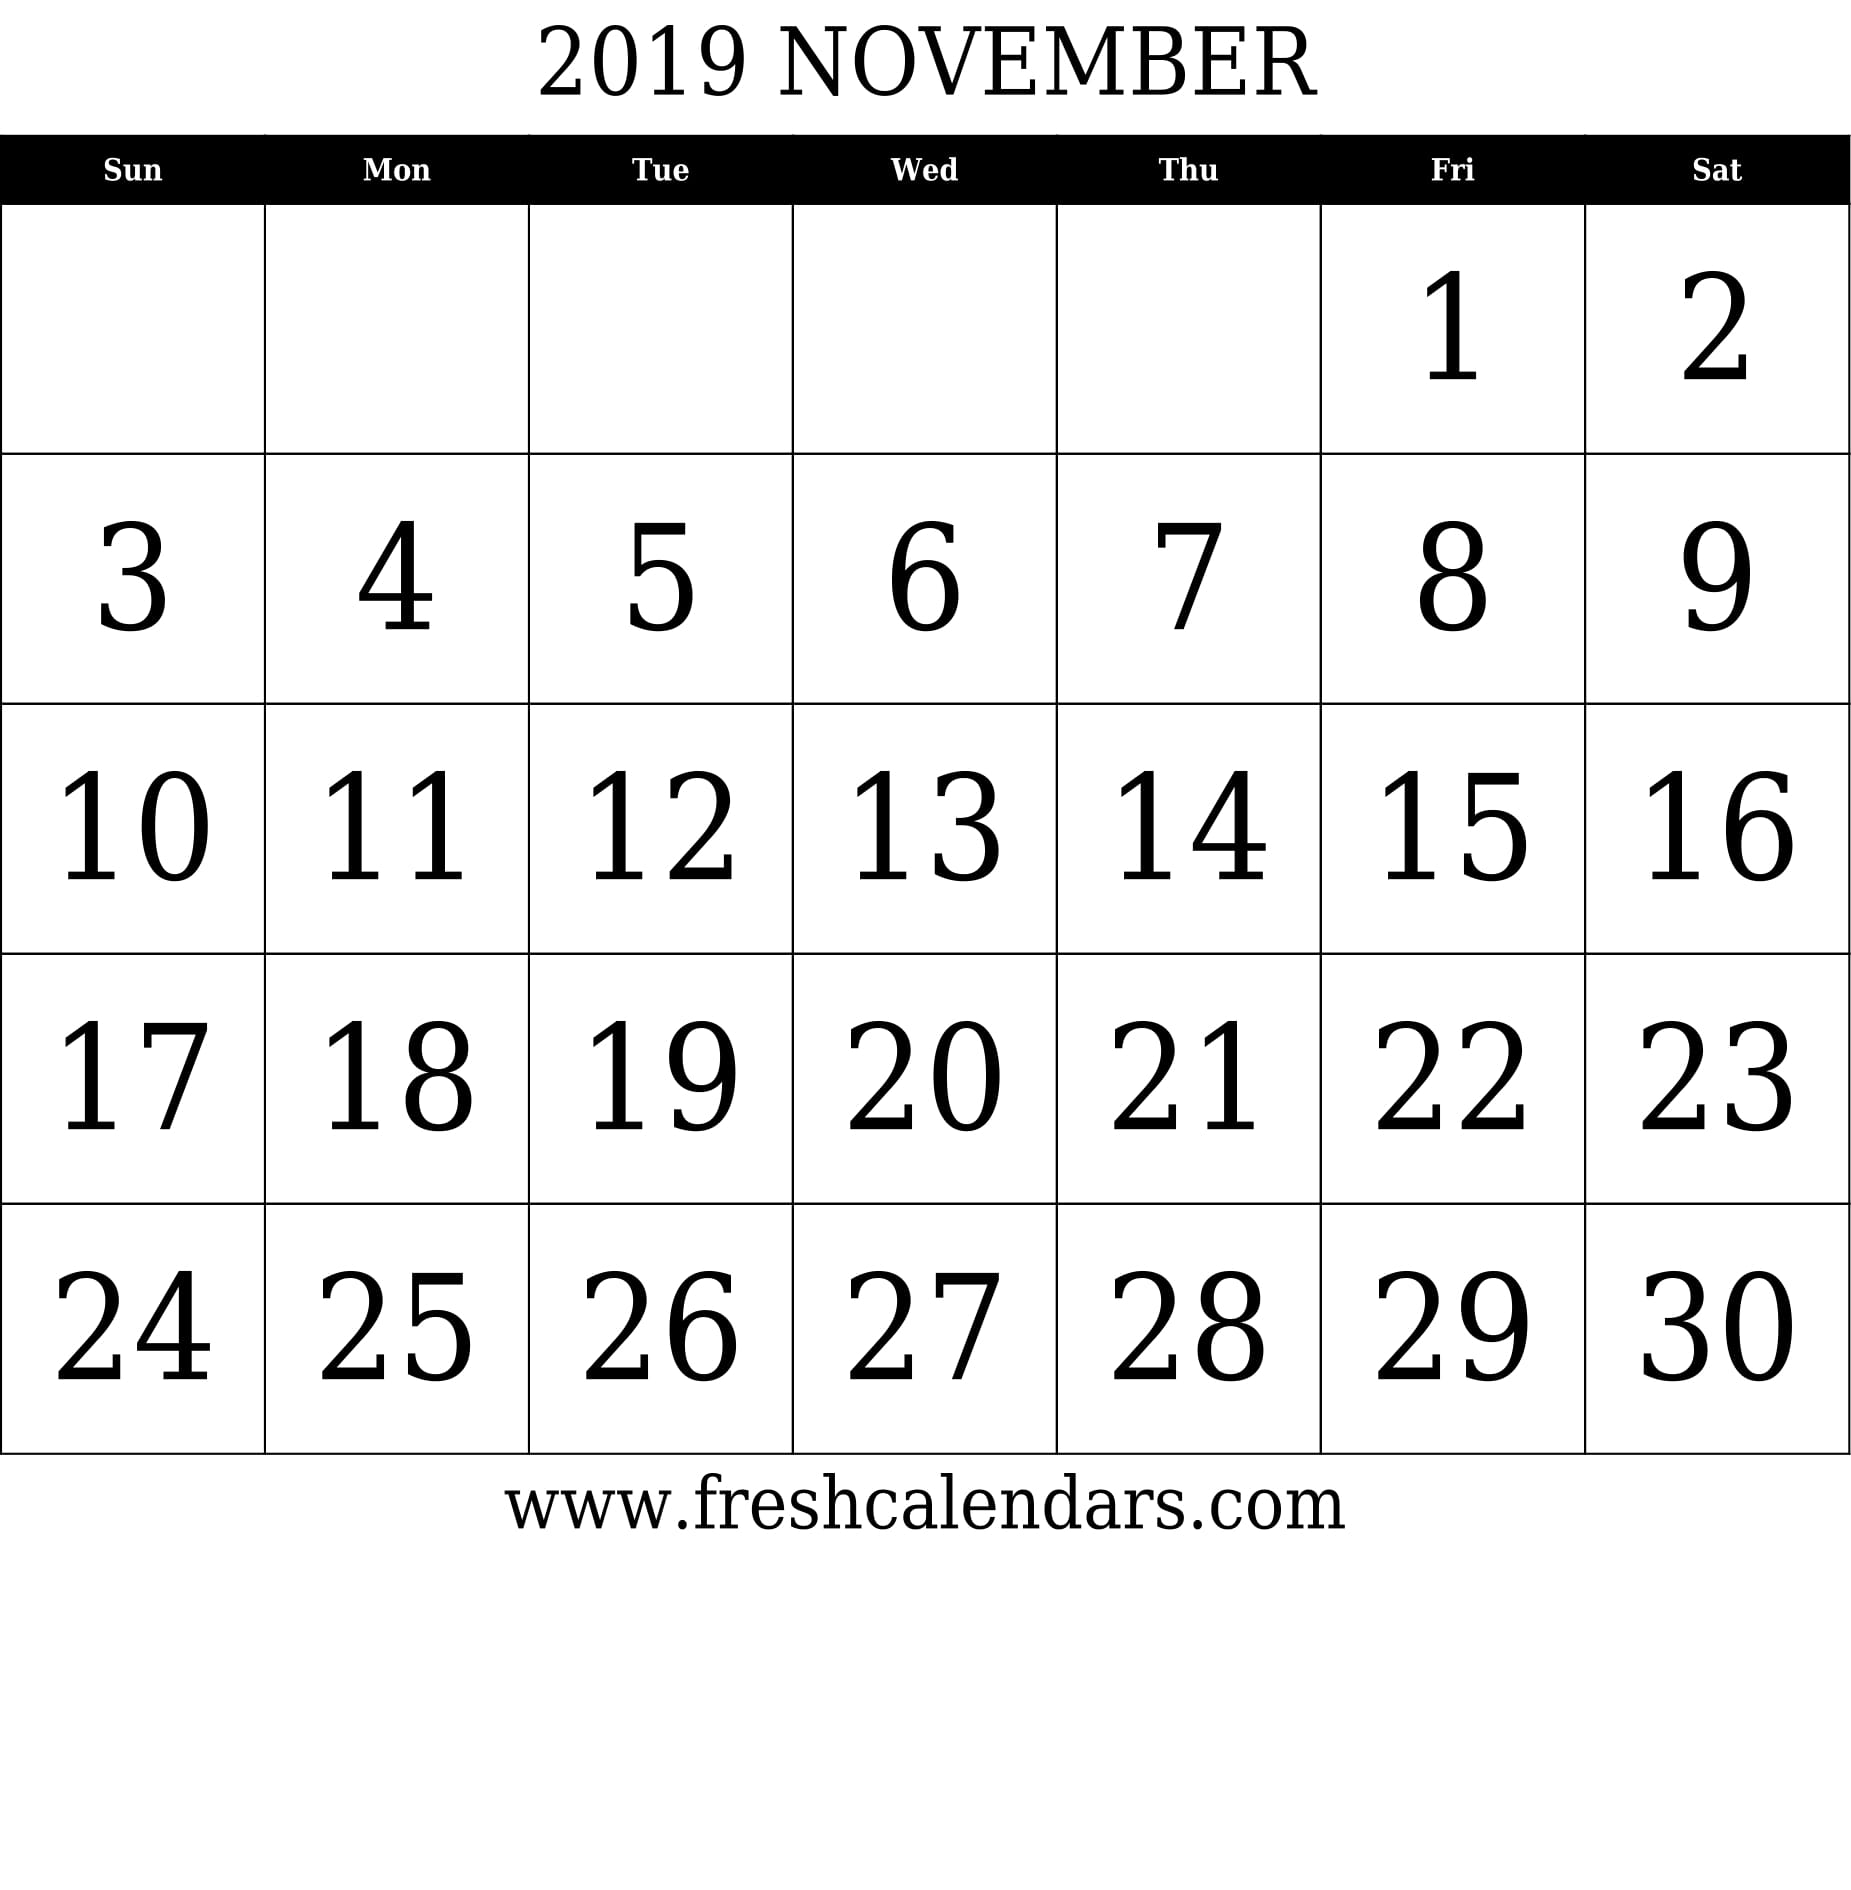 November 2019 Calendar With Large Dates